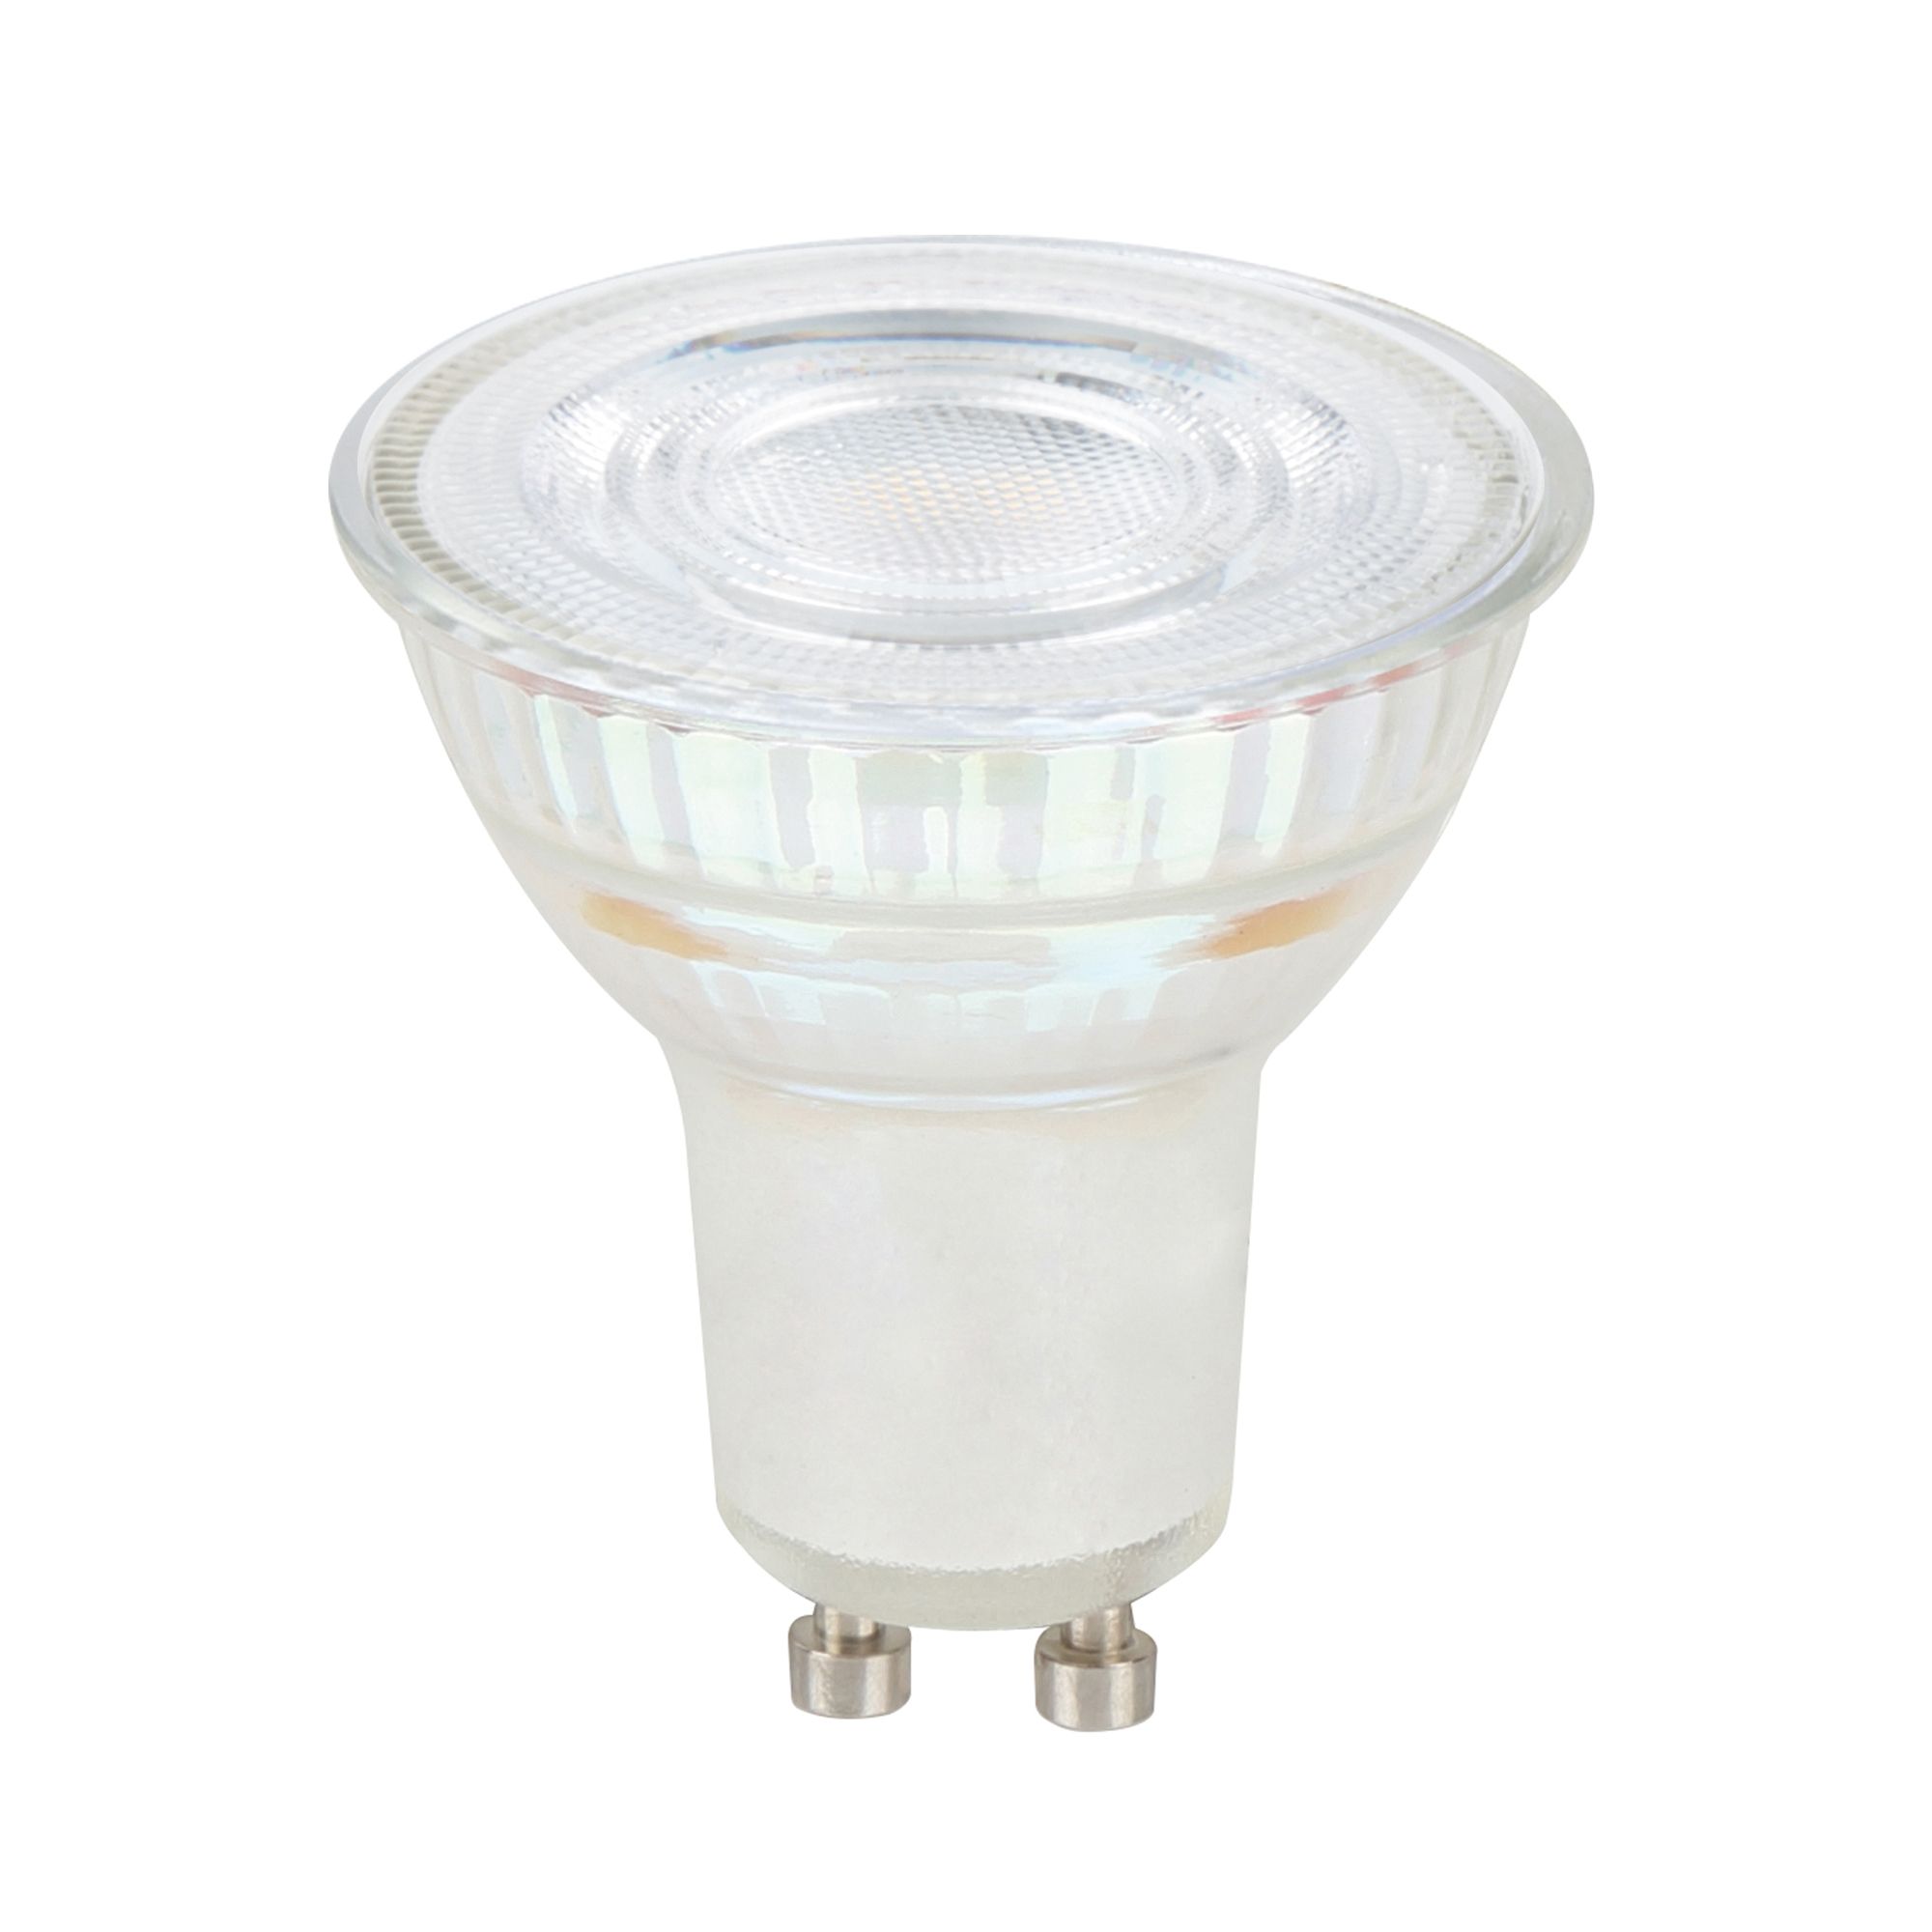 spot Reflector 345lm bulb Light Diall at GU10 | LED B&Q white Clear DIY Dimmable 3.6W Neutral